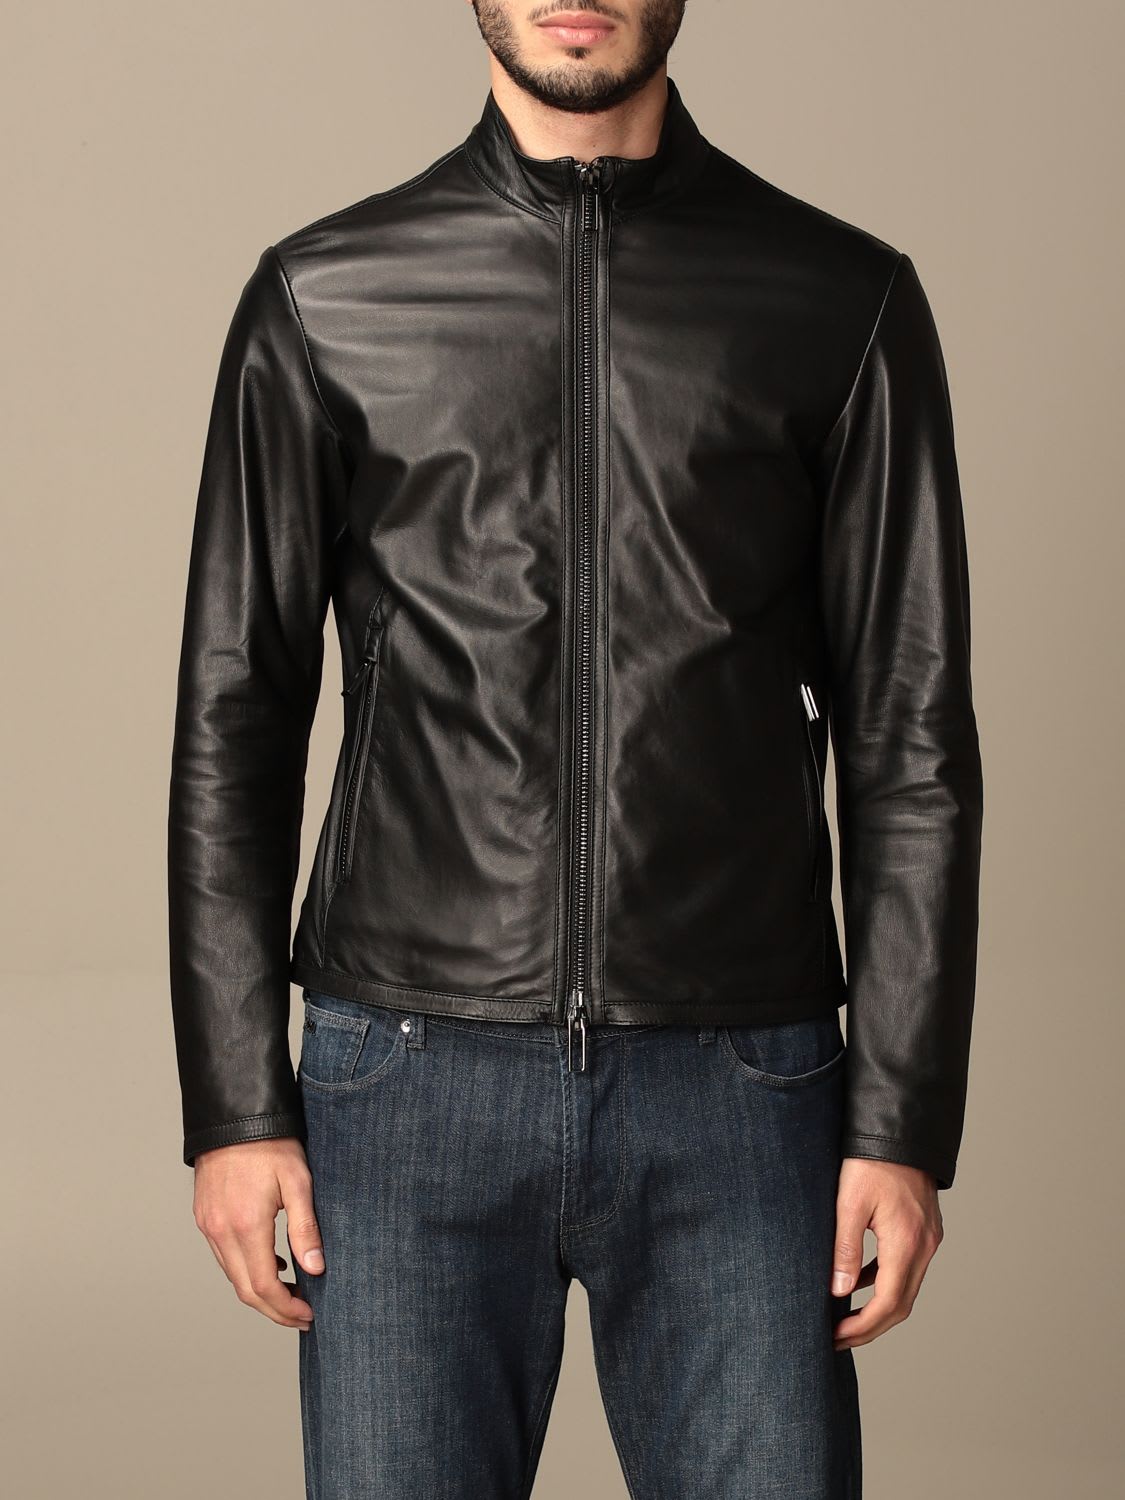 Emporio Armani Jacket Emporio Armani Leather Jacket